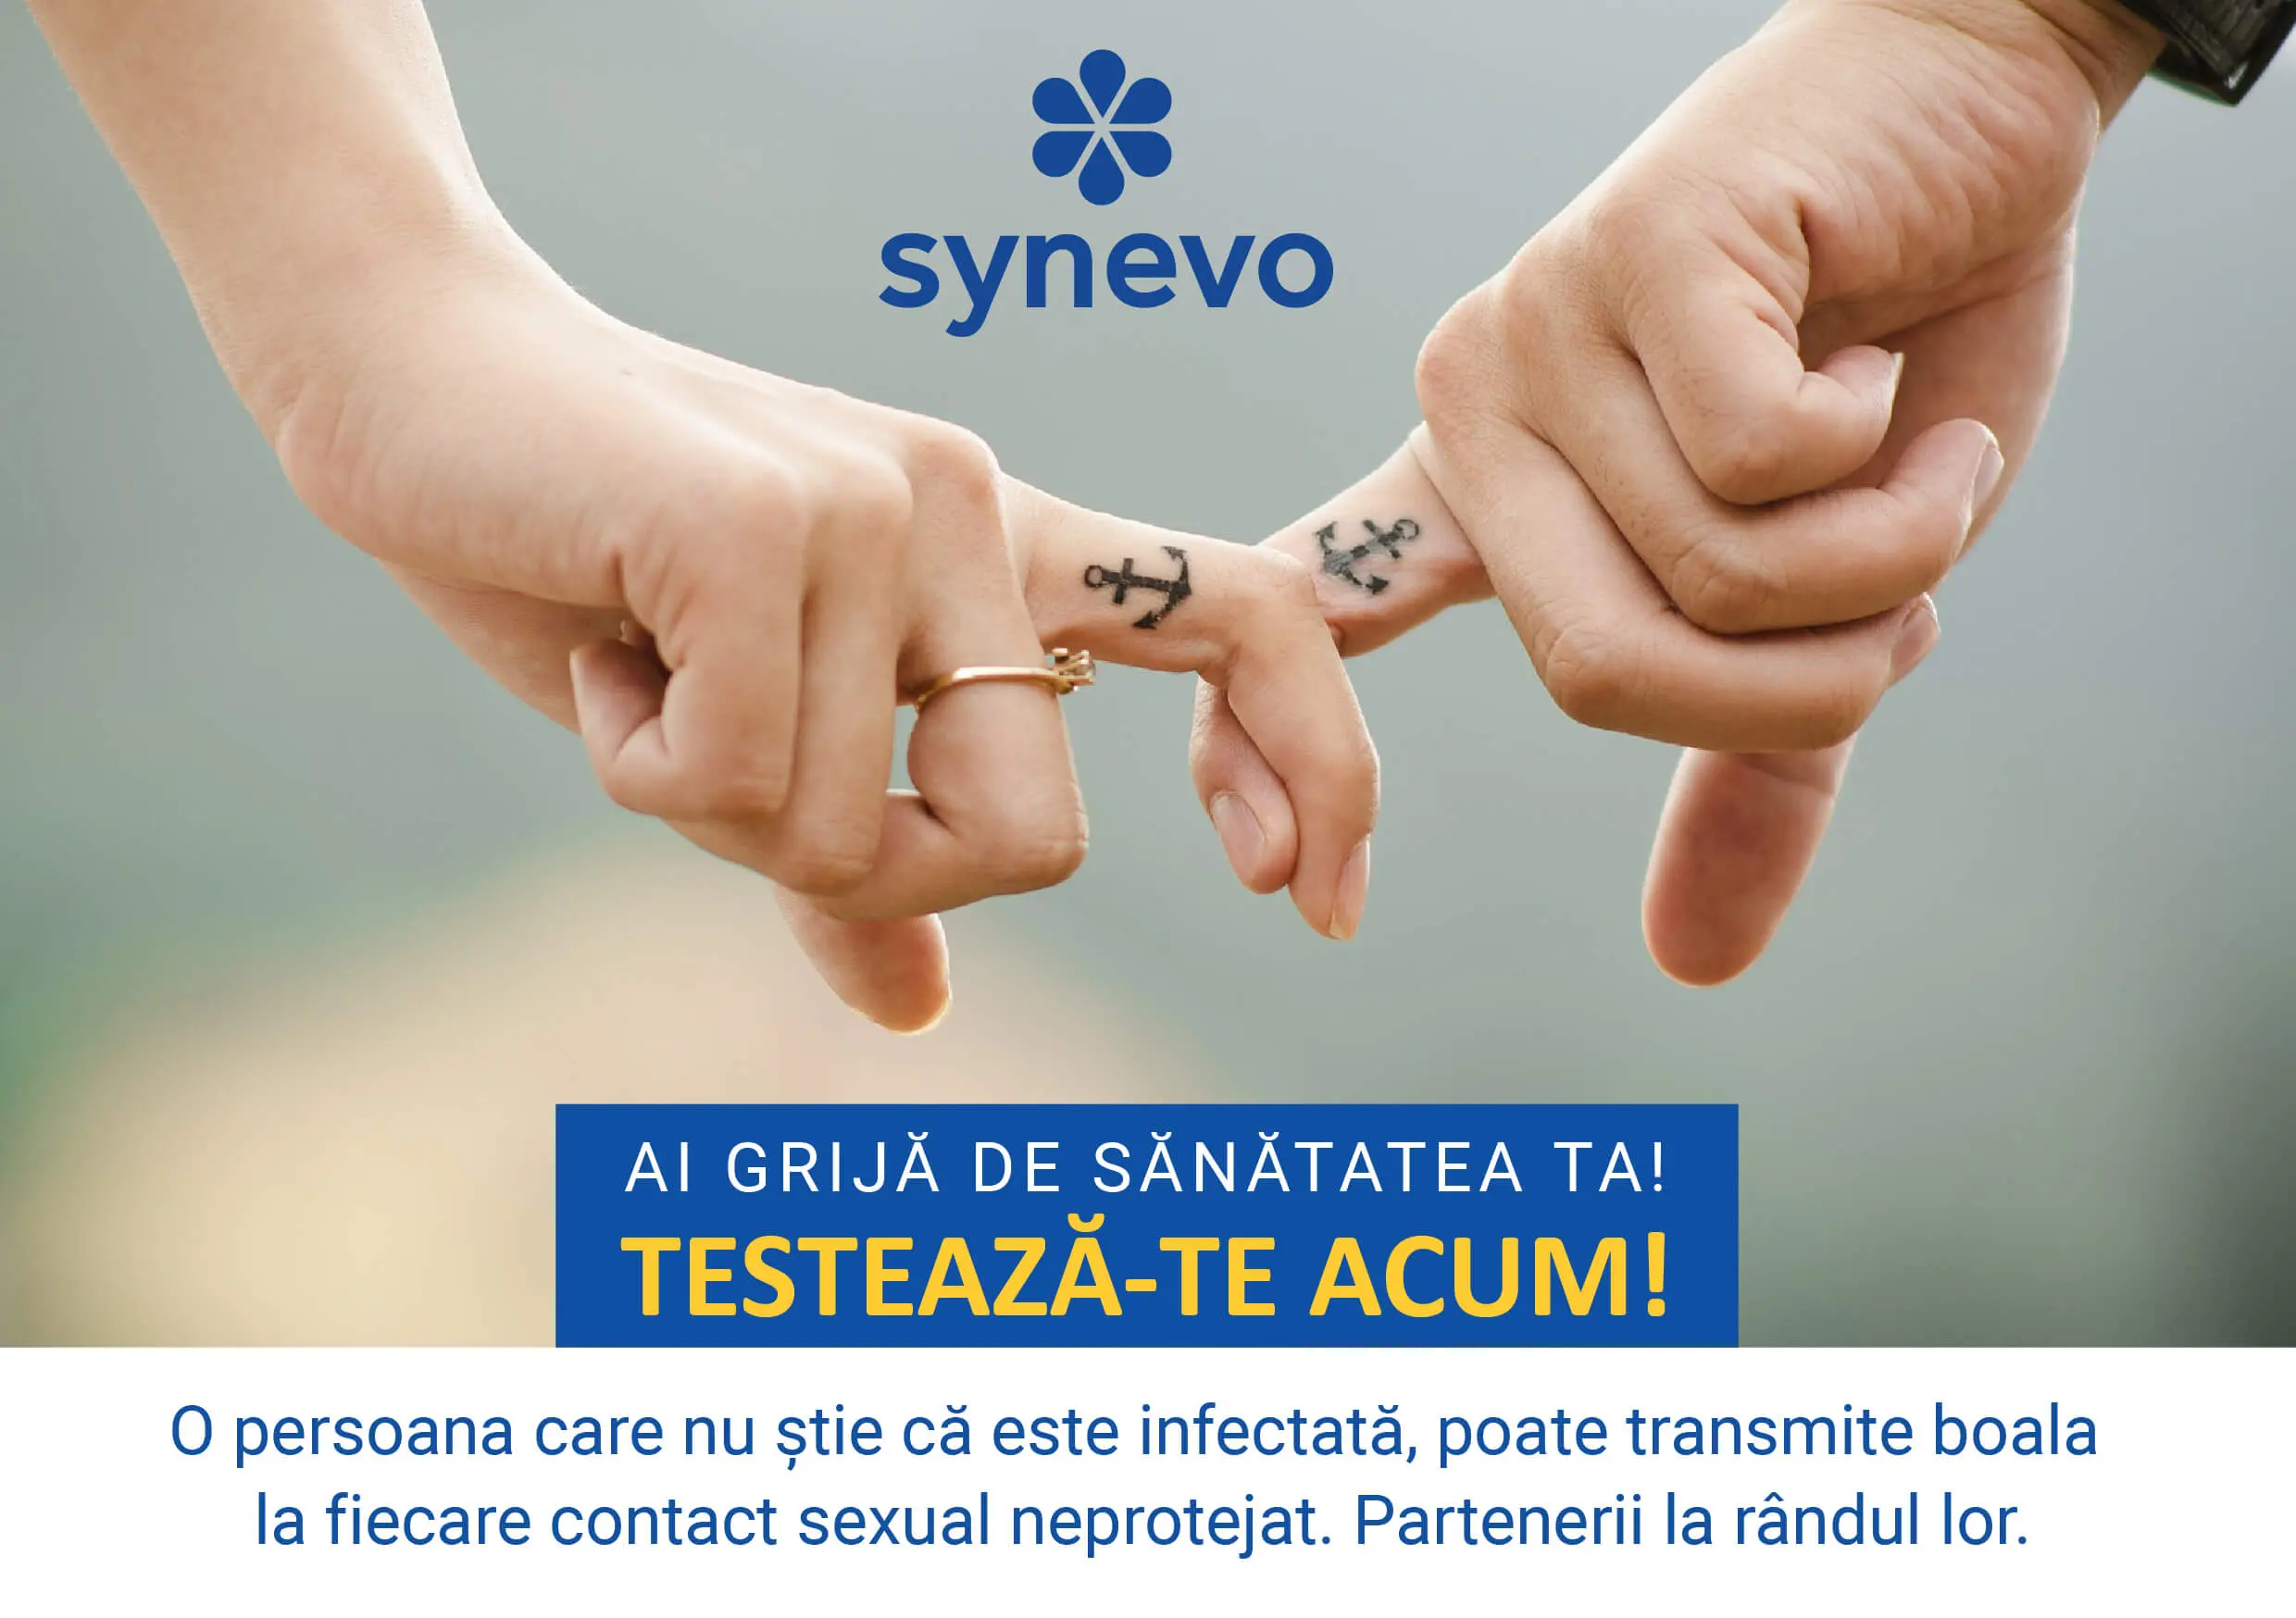 Infectii sexual transmisibile - Synevo